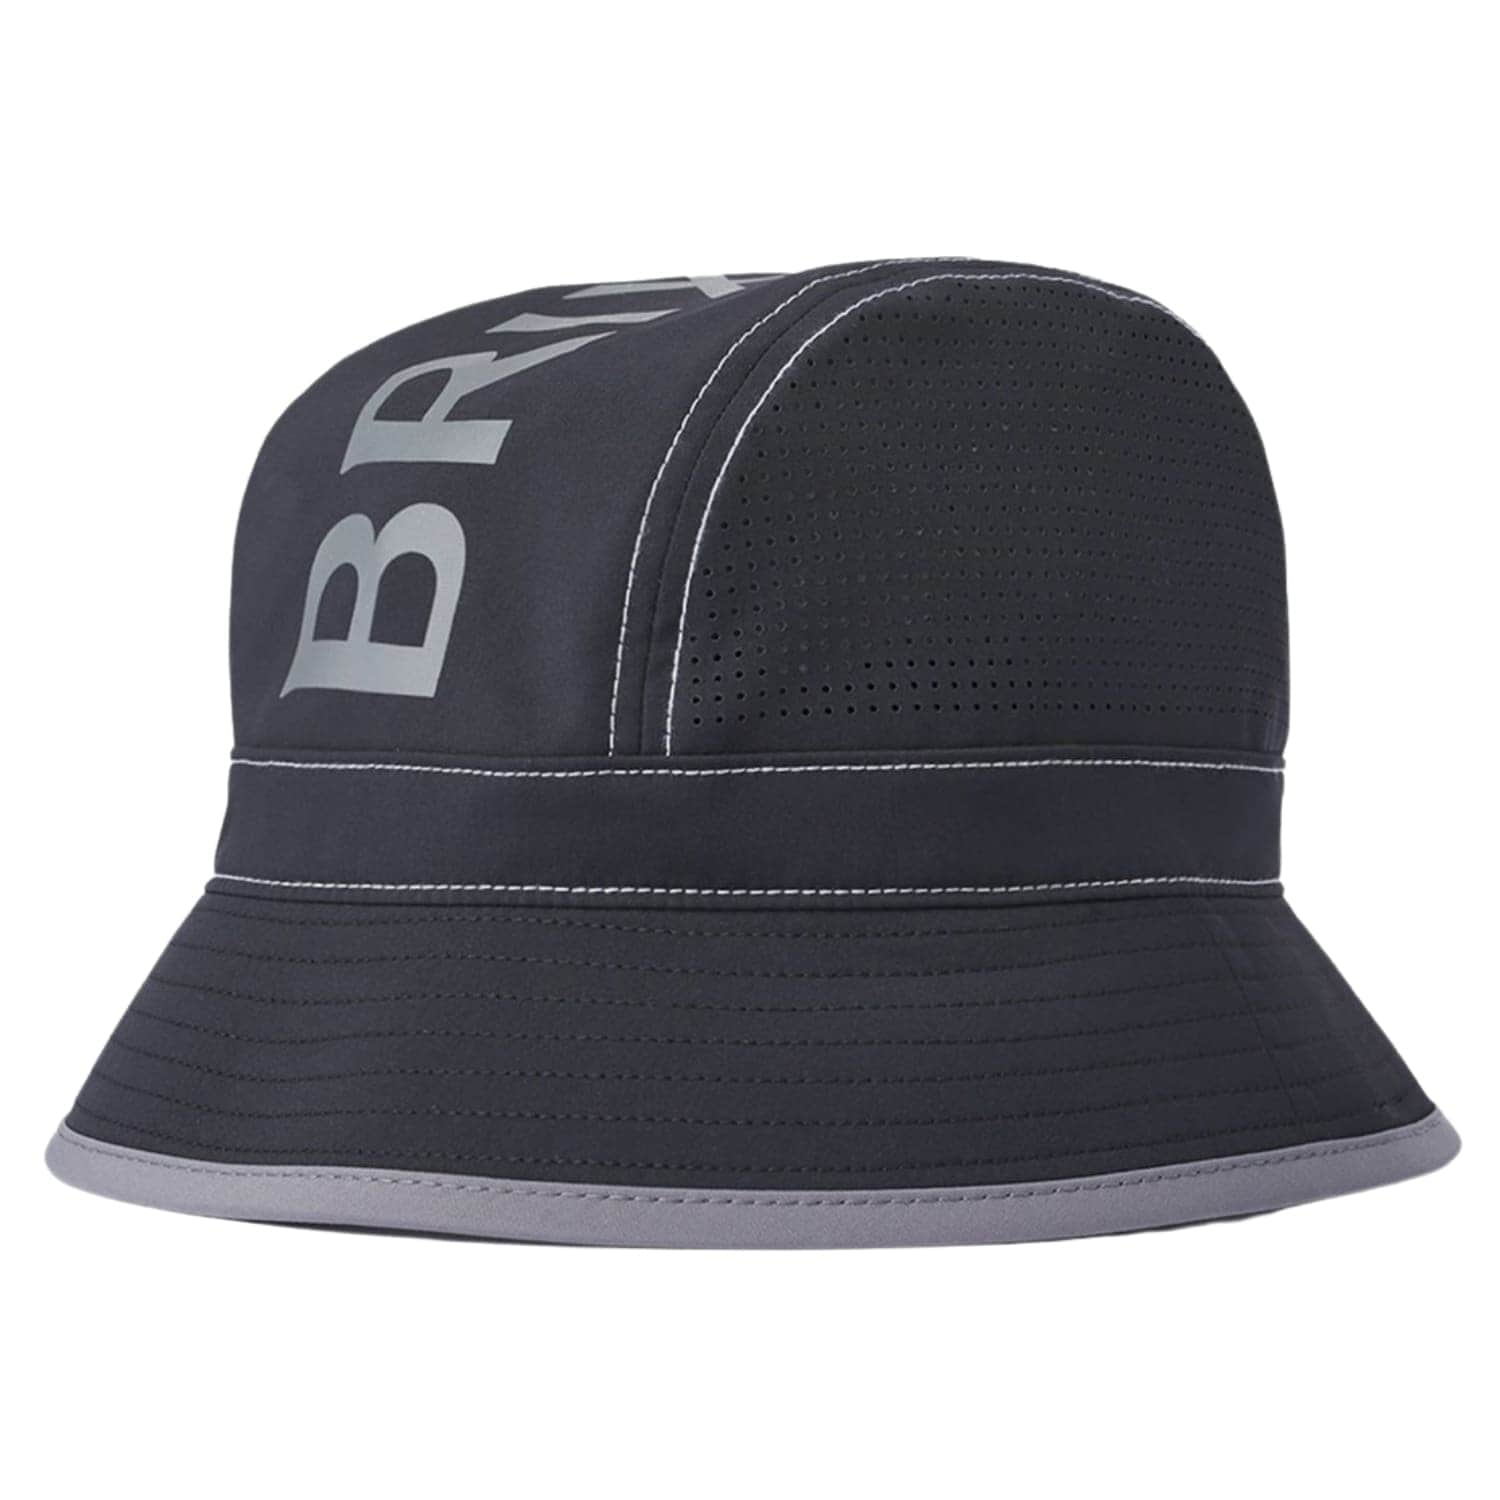 Brixton Links X Packable Bucket Hat - Black - Bucket Hat by Brixton